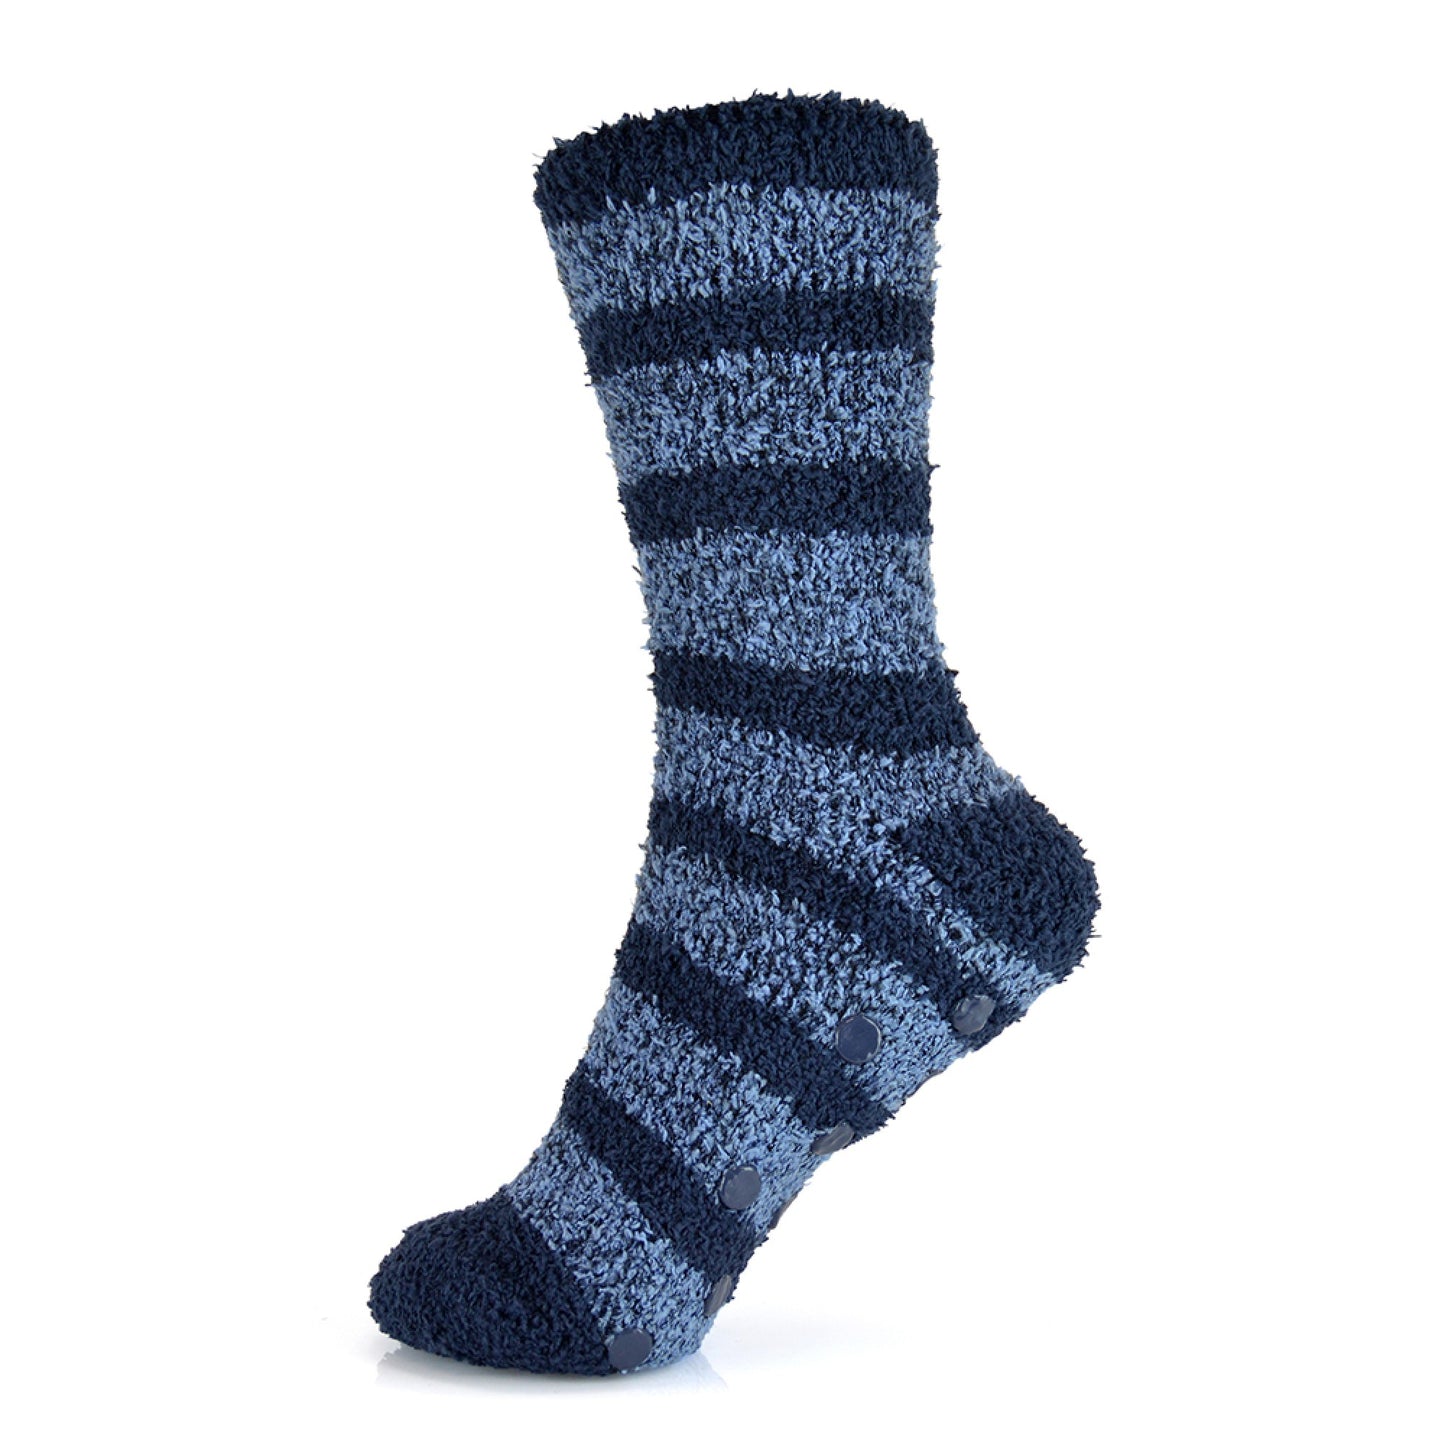 4 Pairs Men's Cosy Non-Skid Gripper Slipper Socks UK 7-11 - Blue and Black